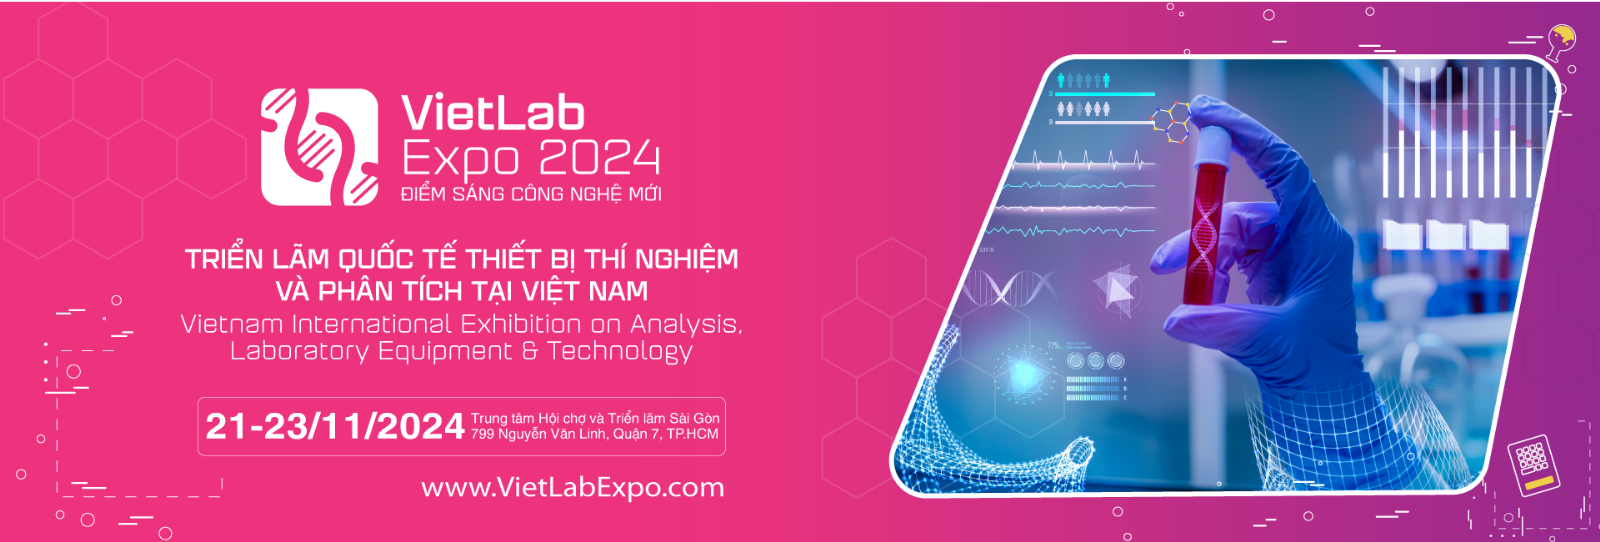 VietLab Expo 2024